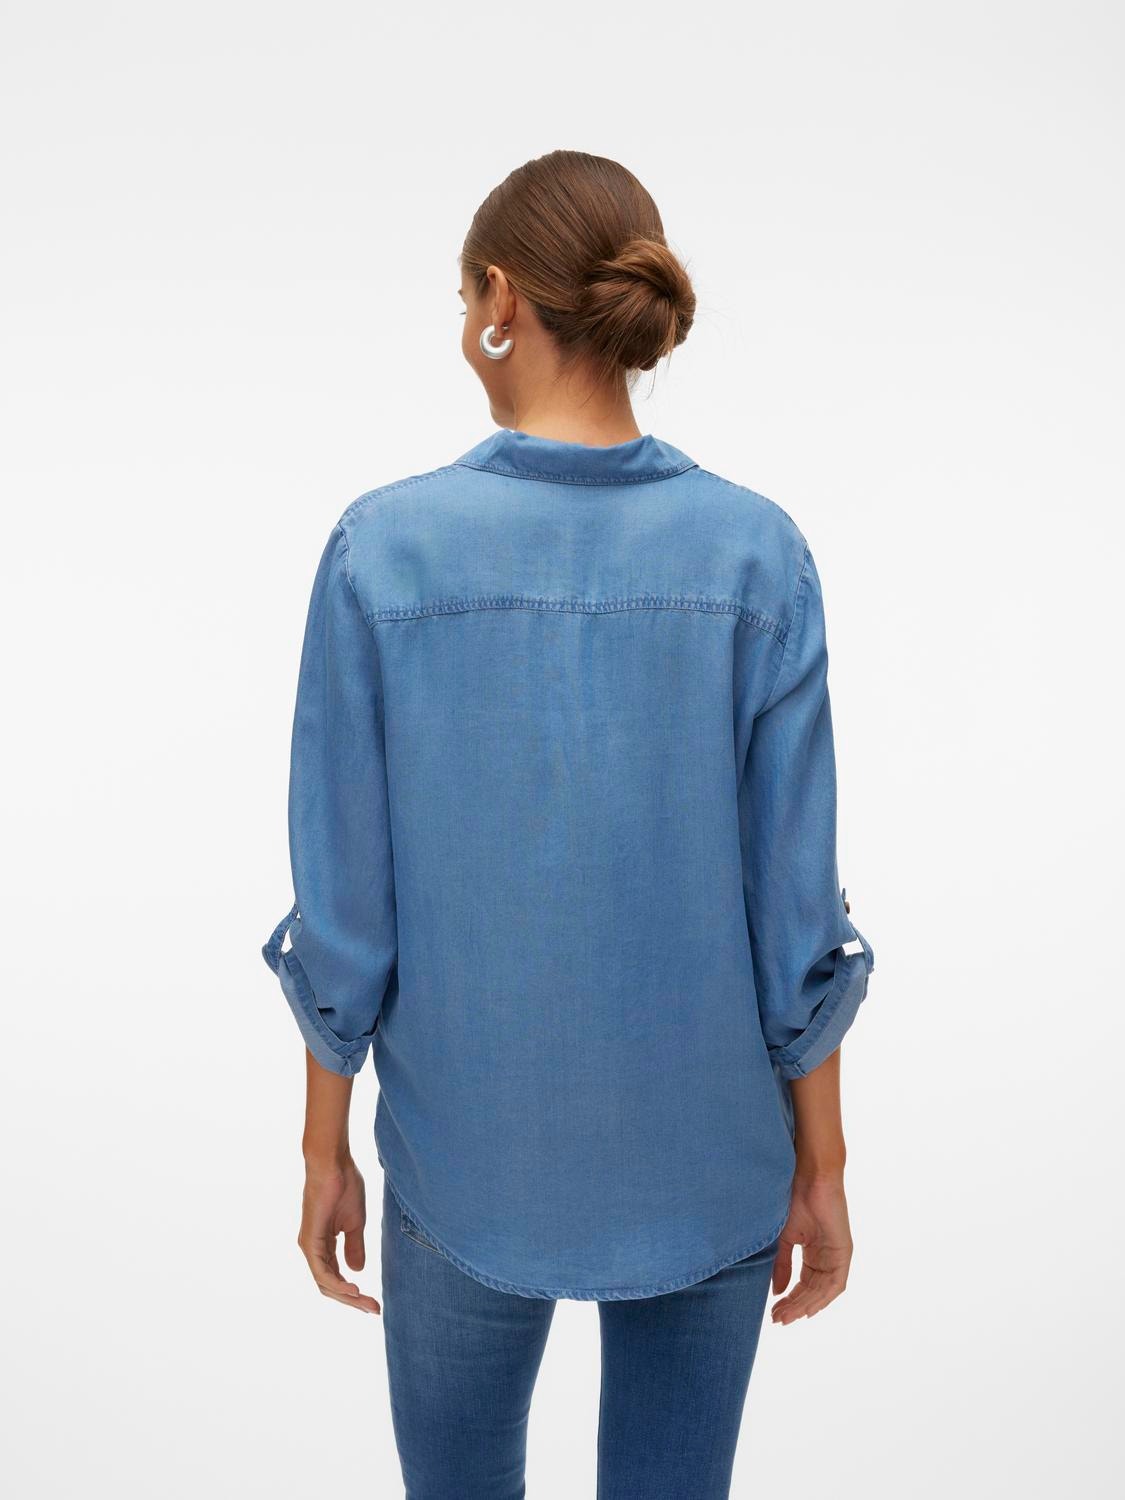 Vero Moda VMBREE Shirt -Medium Blue Denim - 10304863